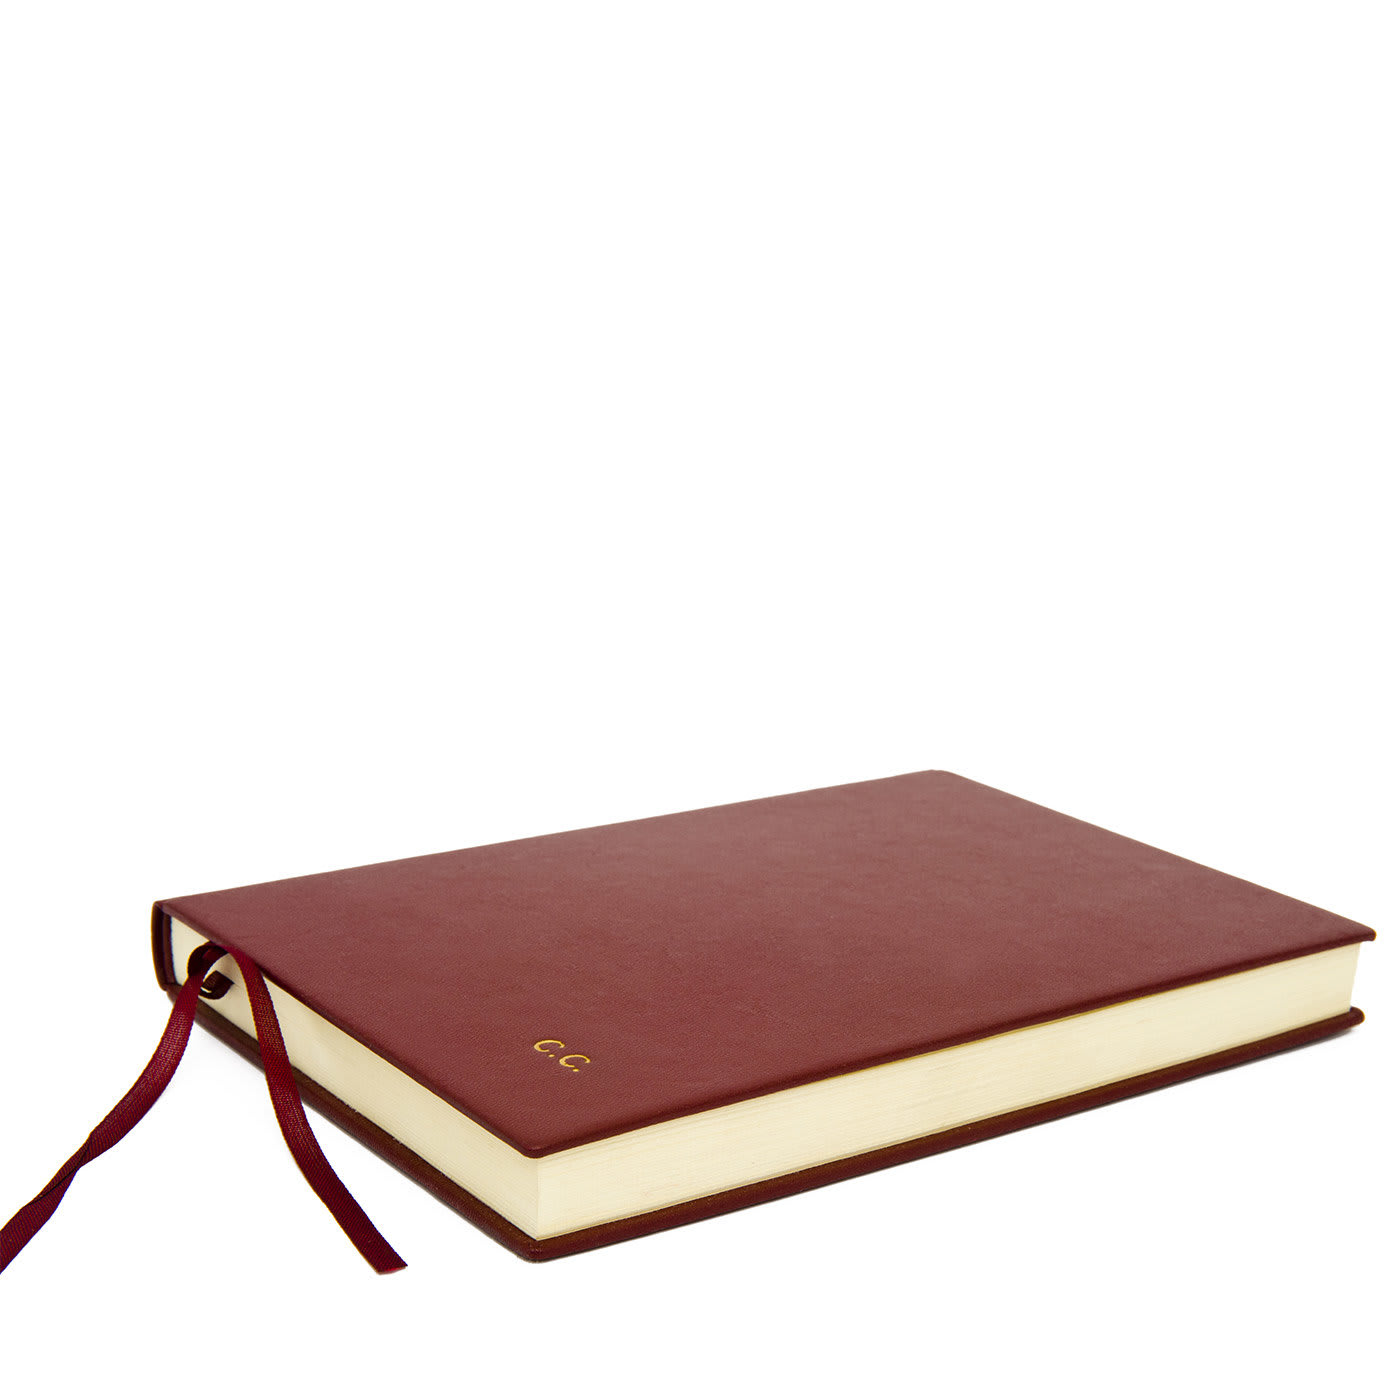 Inciso Leather Notebook - Legatoria Artigiana